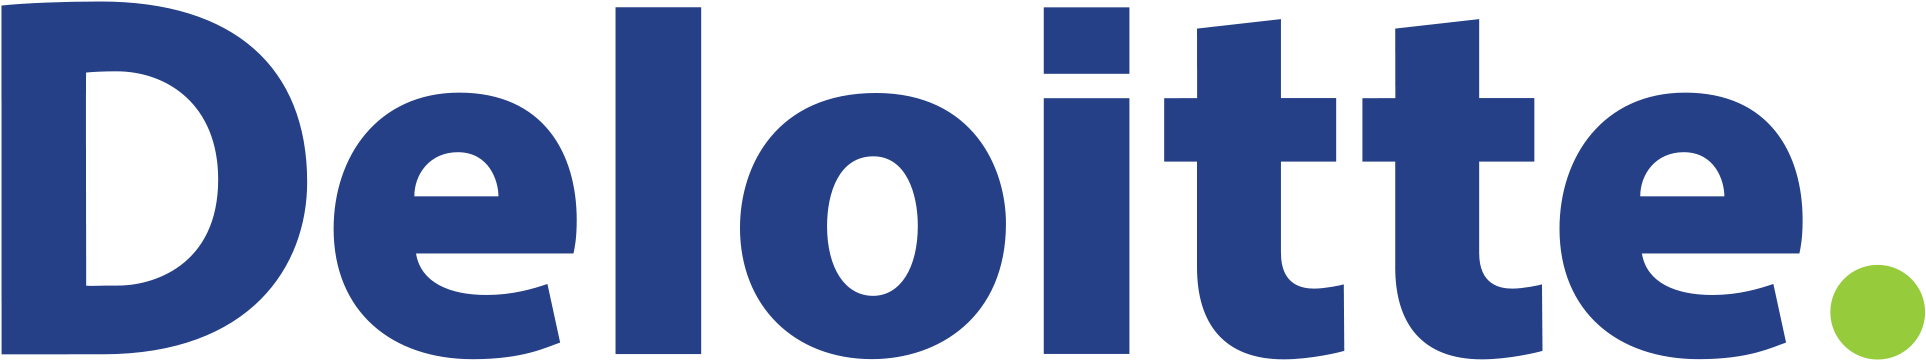 Graduates - Deloitte Logo Vector.